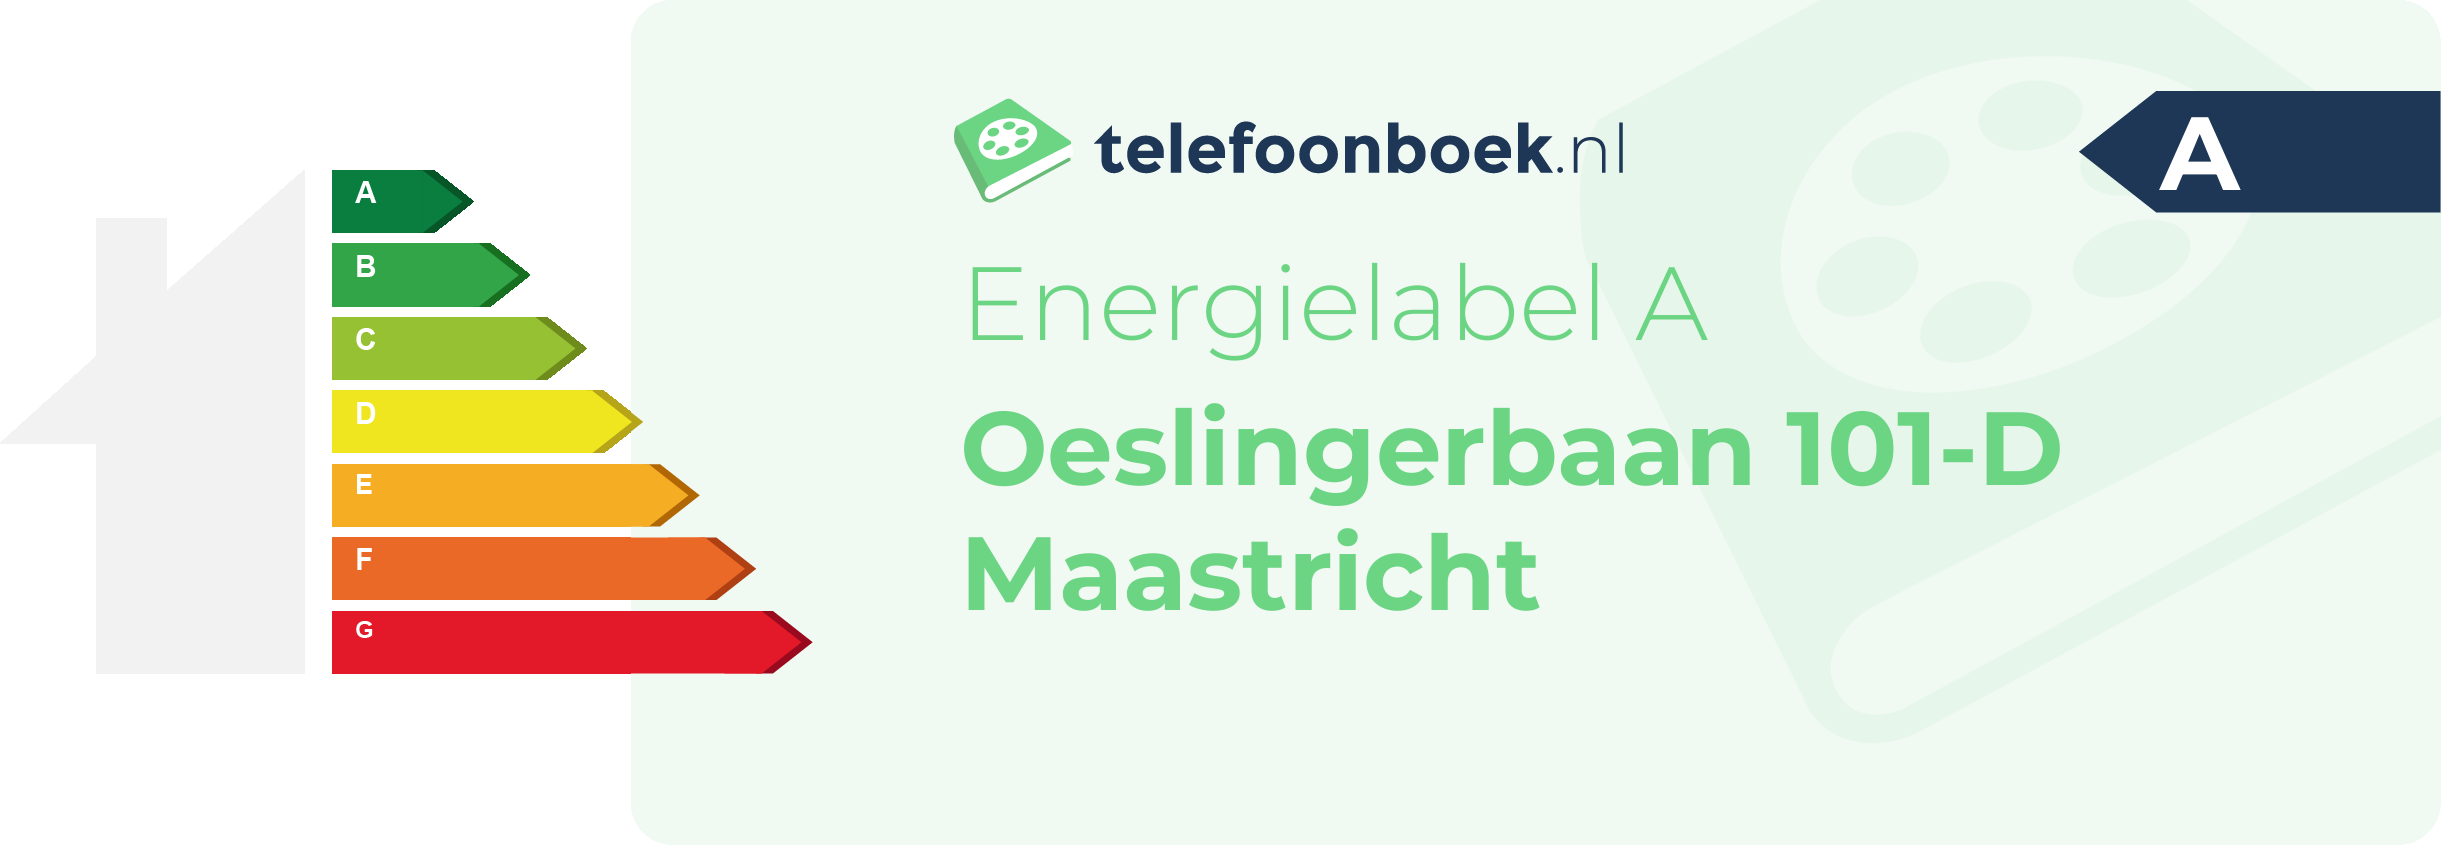 Energielabel Oeslingerbaan 101-D Maastricht